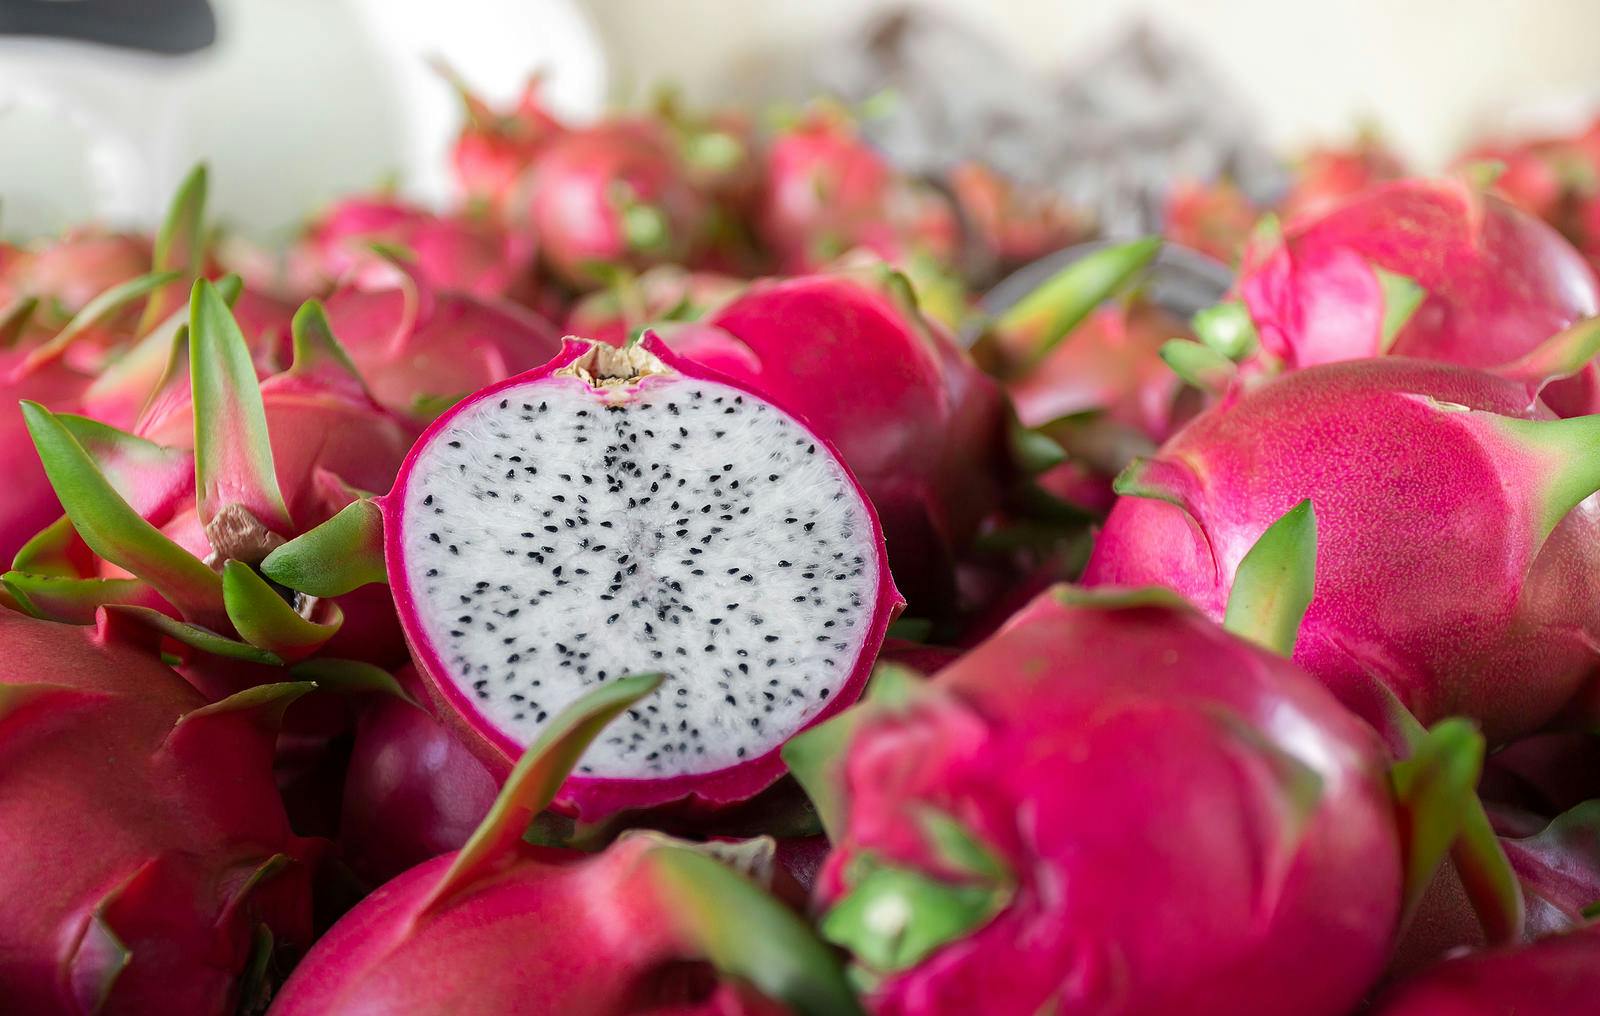 pitaya is the source of dragon fruit juice